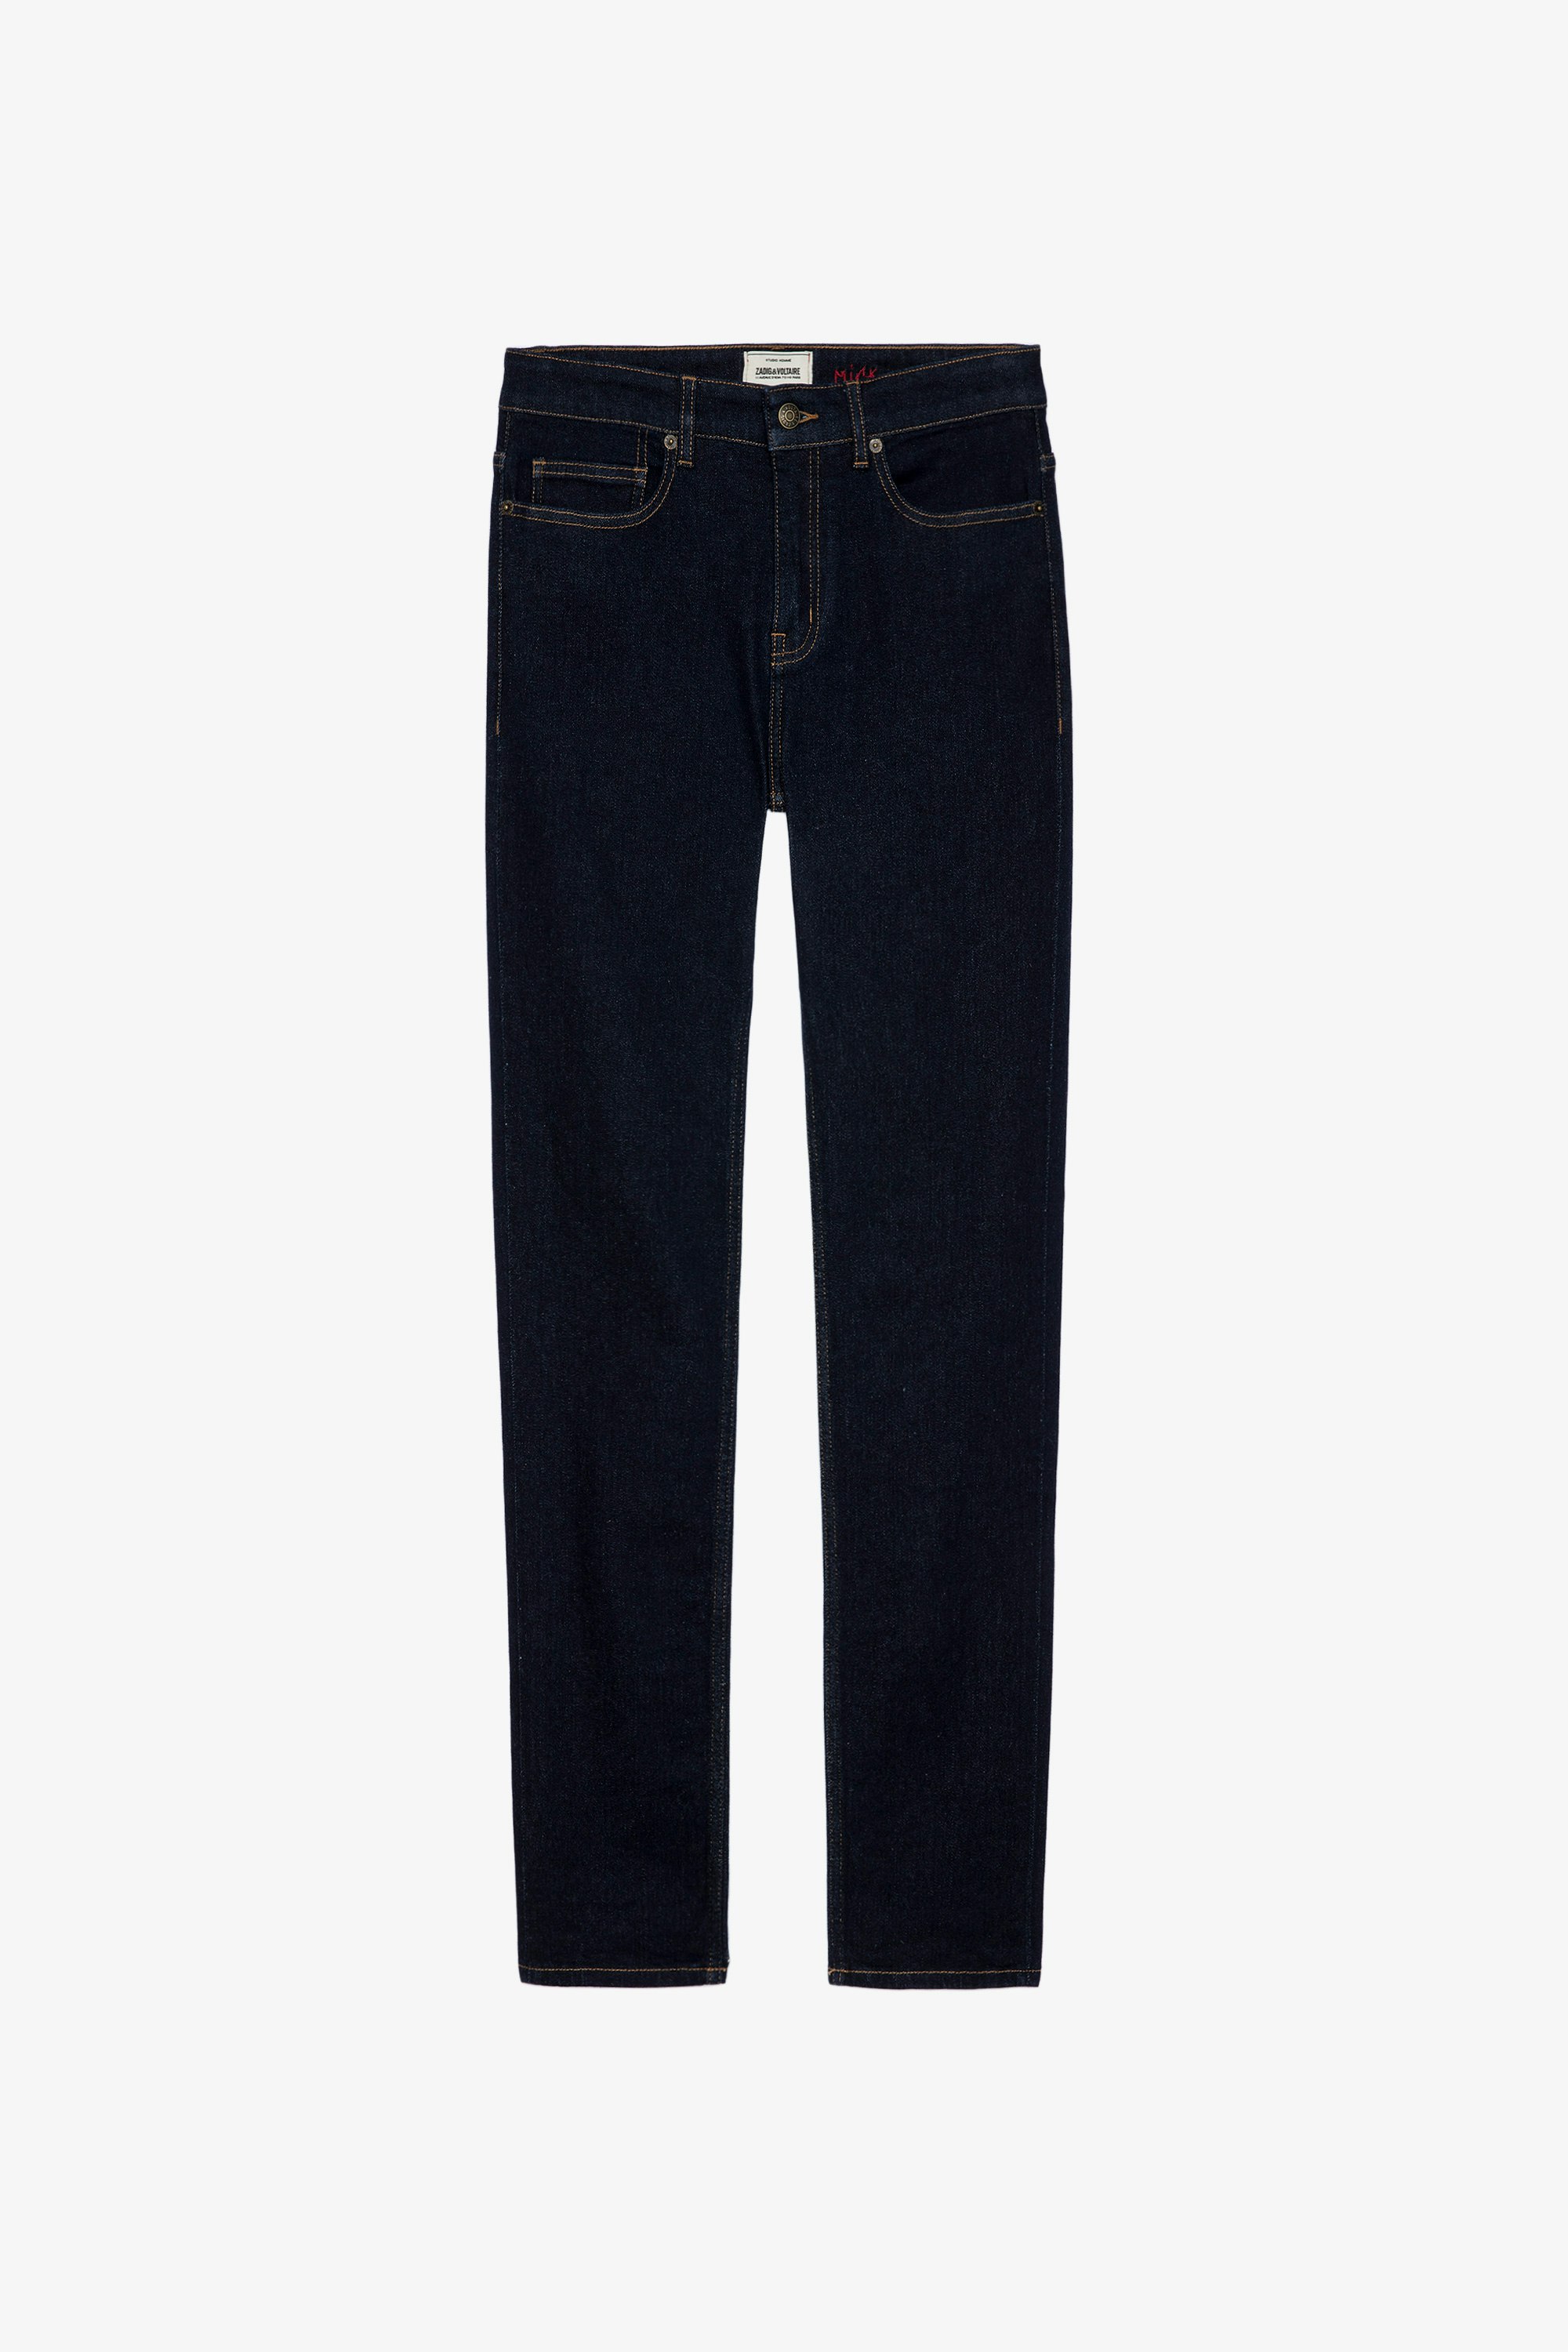 Mick Jeans Men’s slim-fit raw denim jeans